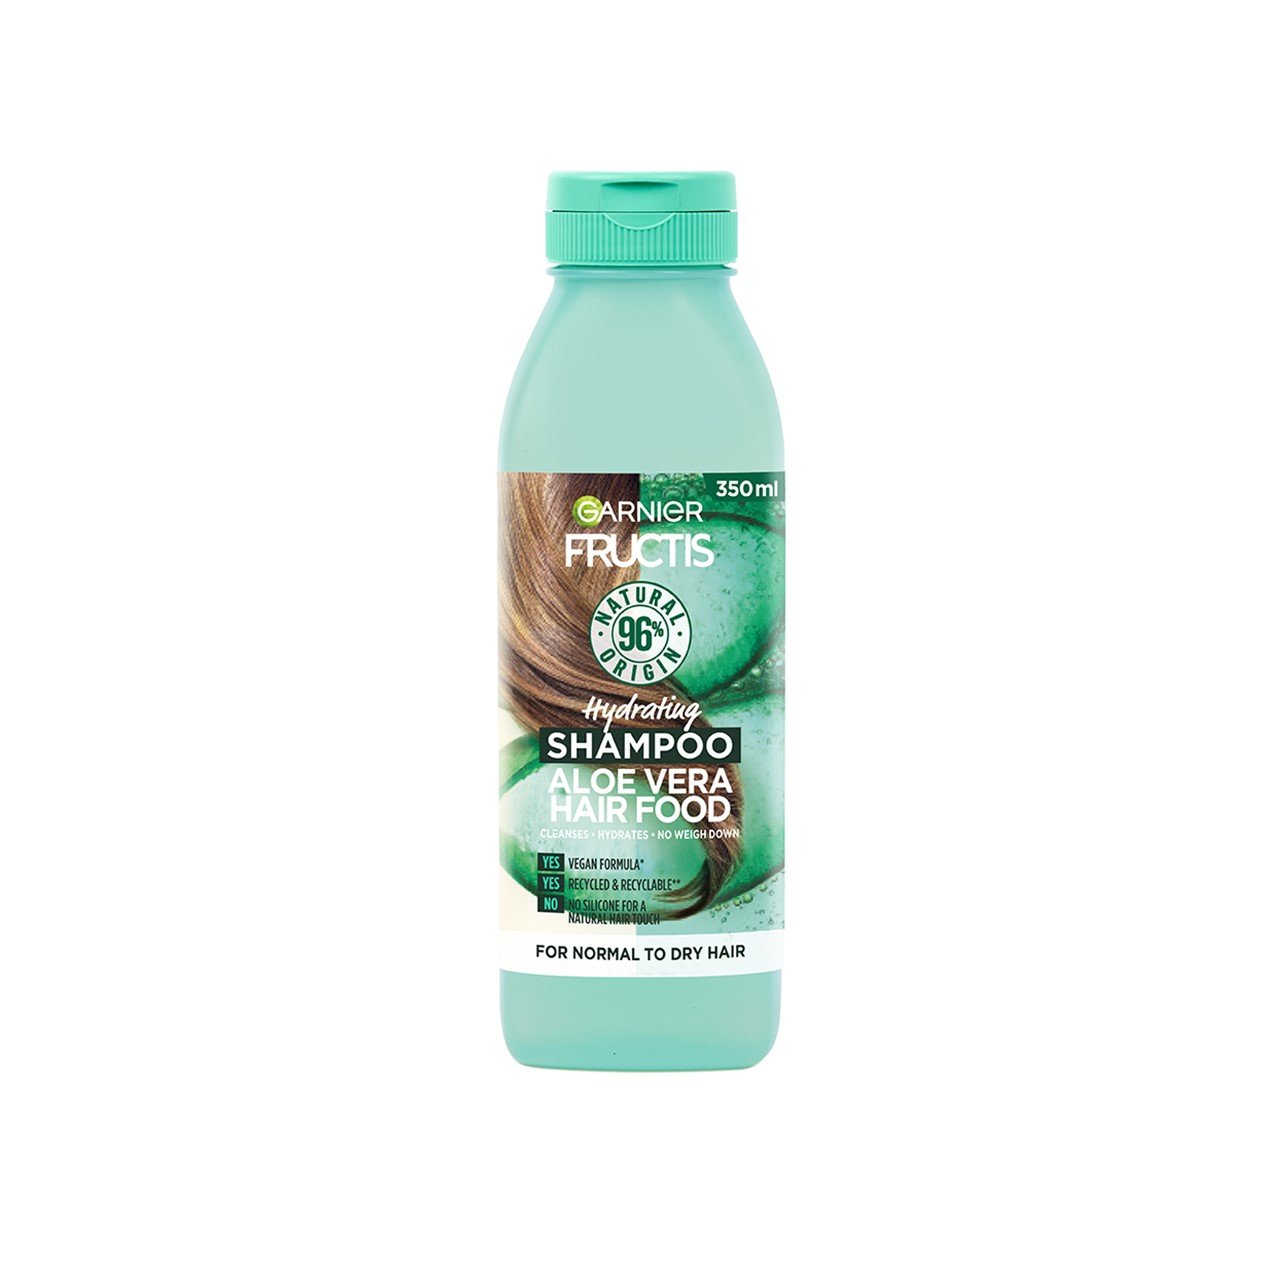 Garnier Fructis Hair Food Aloe Vera Shampoo 350ml (11.8 fl oz)